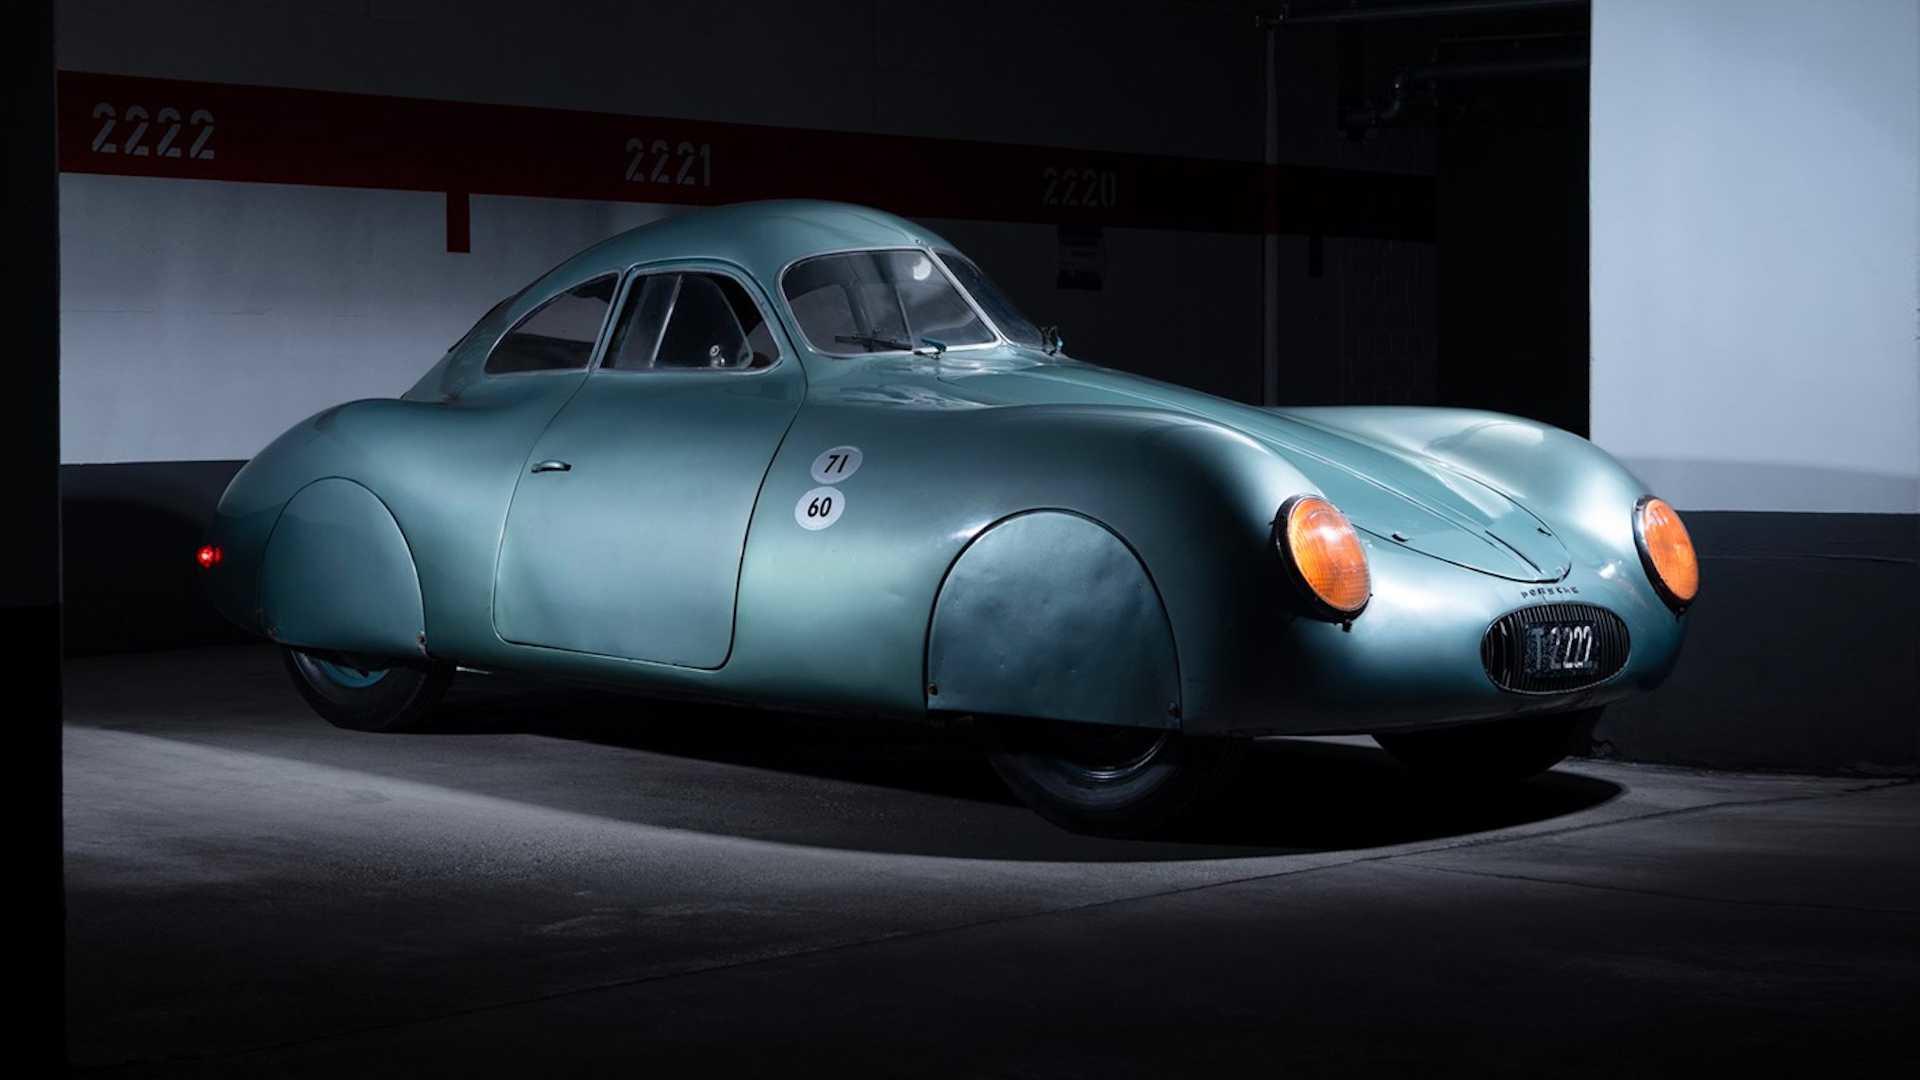 Automobil Porsche Type 64 vystavený na aukci